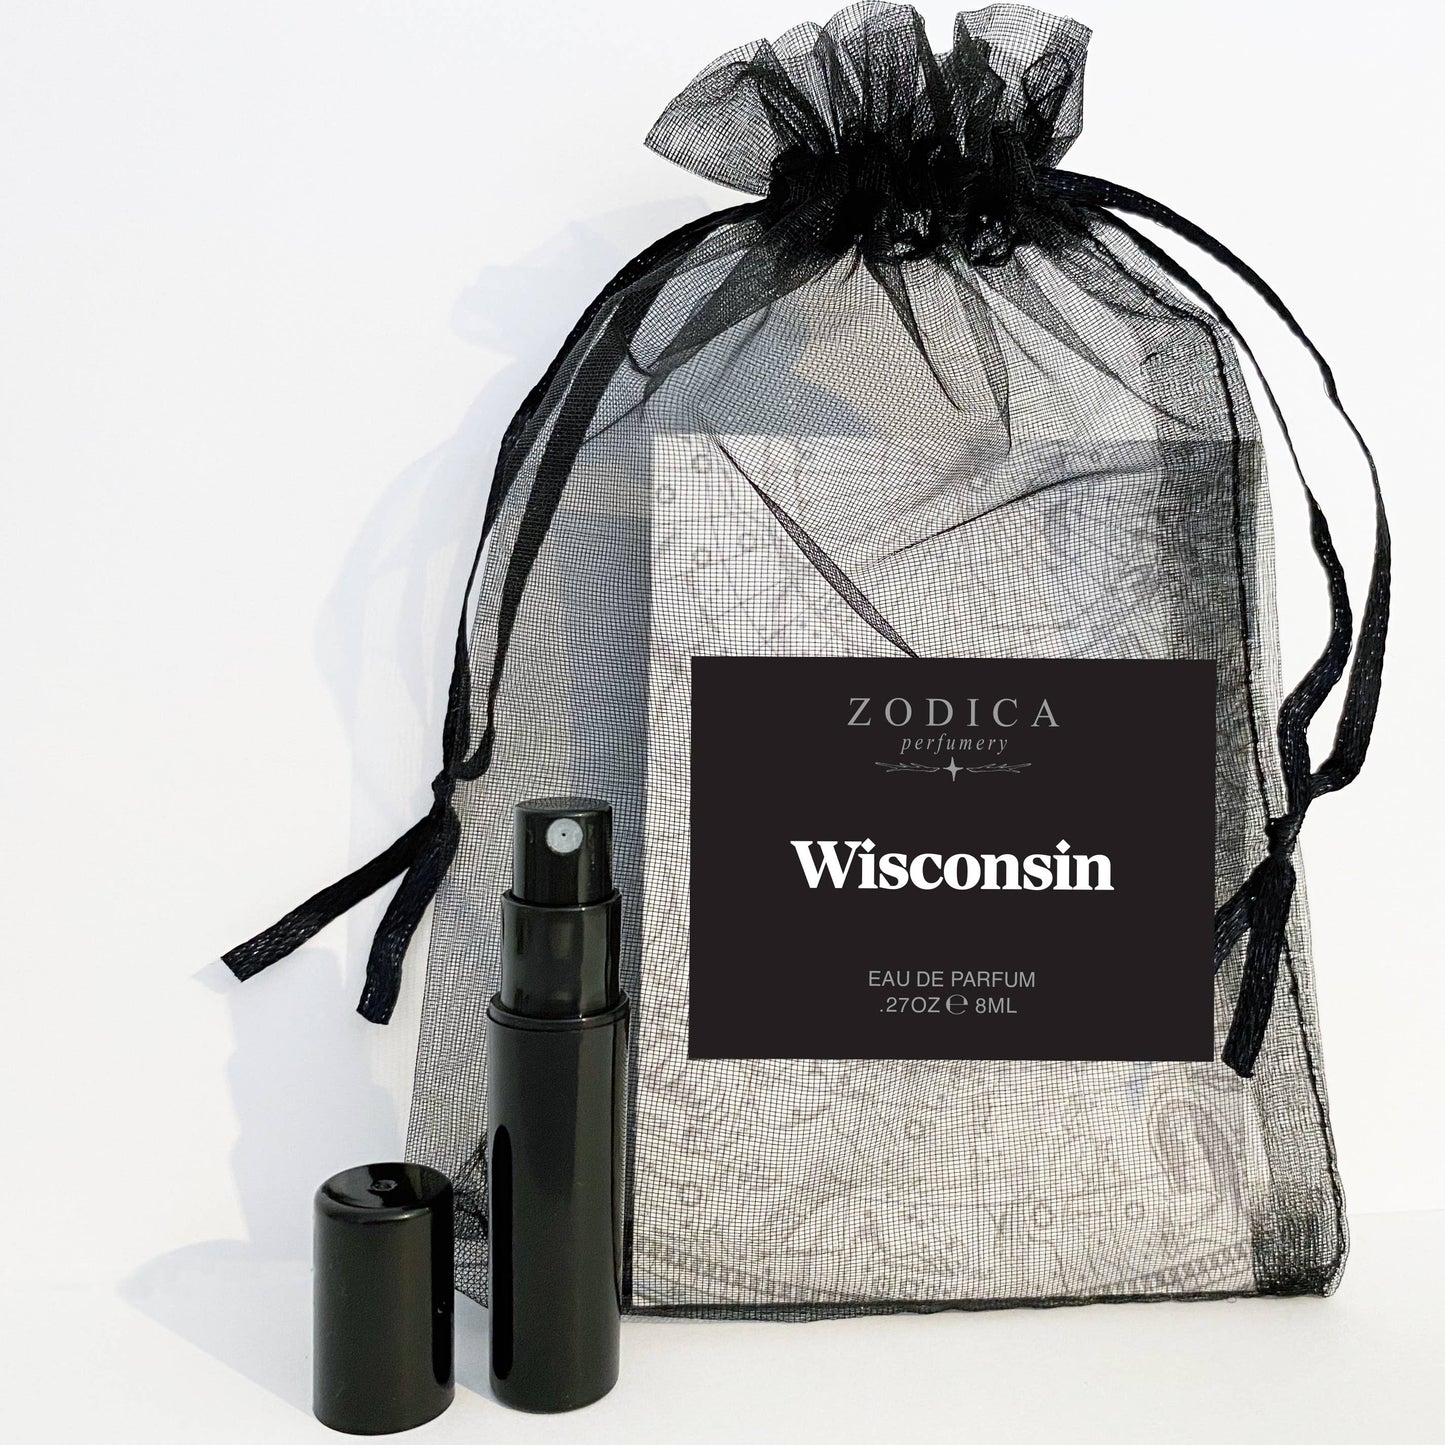 Wisconsin Perfume Spray